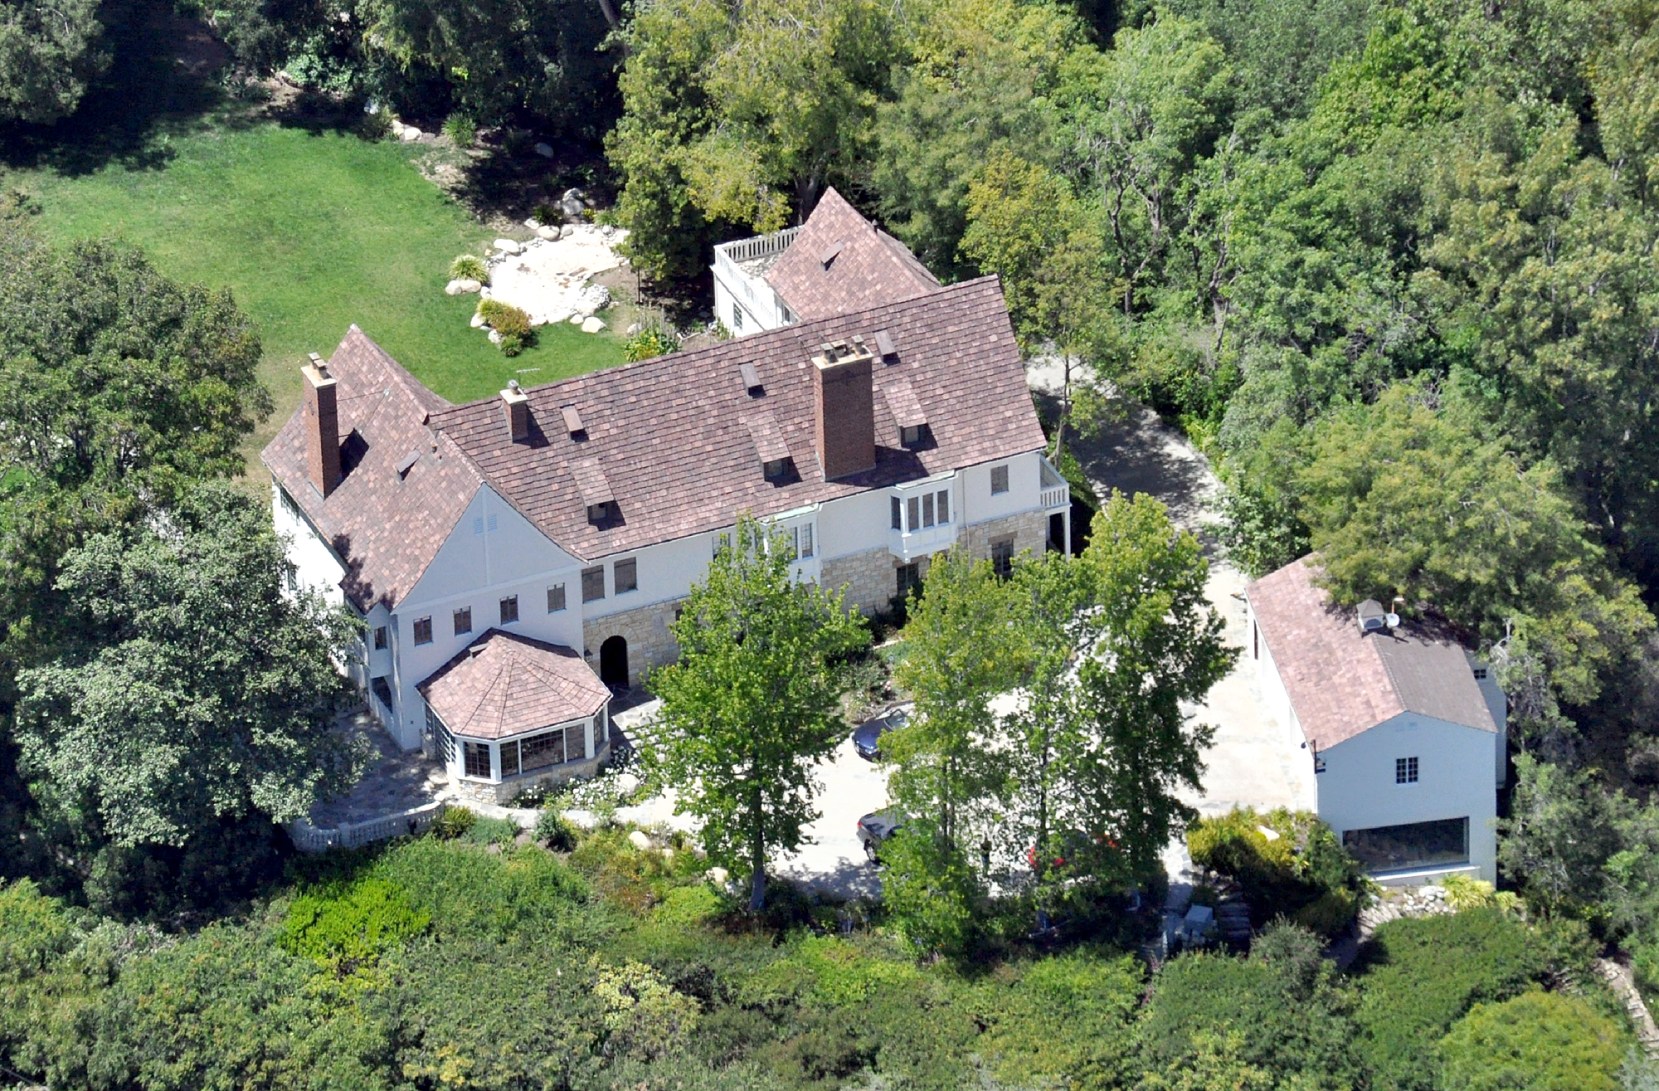 Where Does Sandra Bullock Live? Details on Her Many Homes